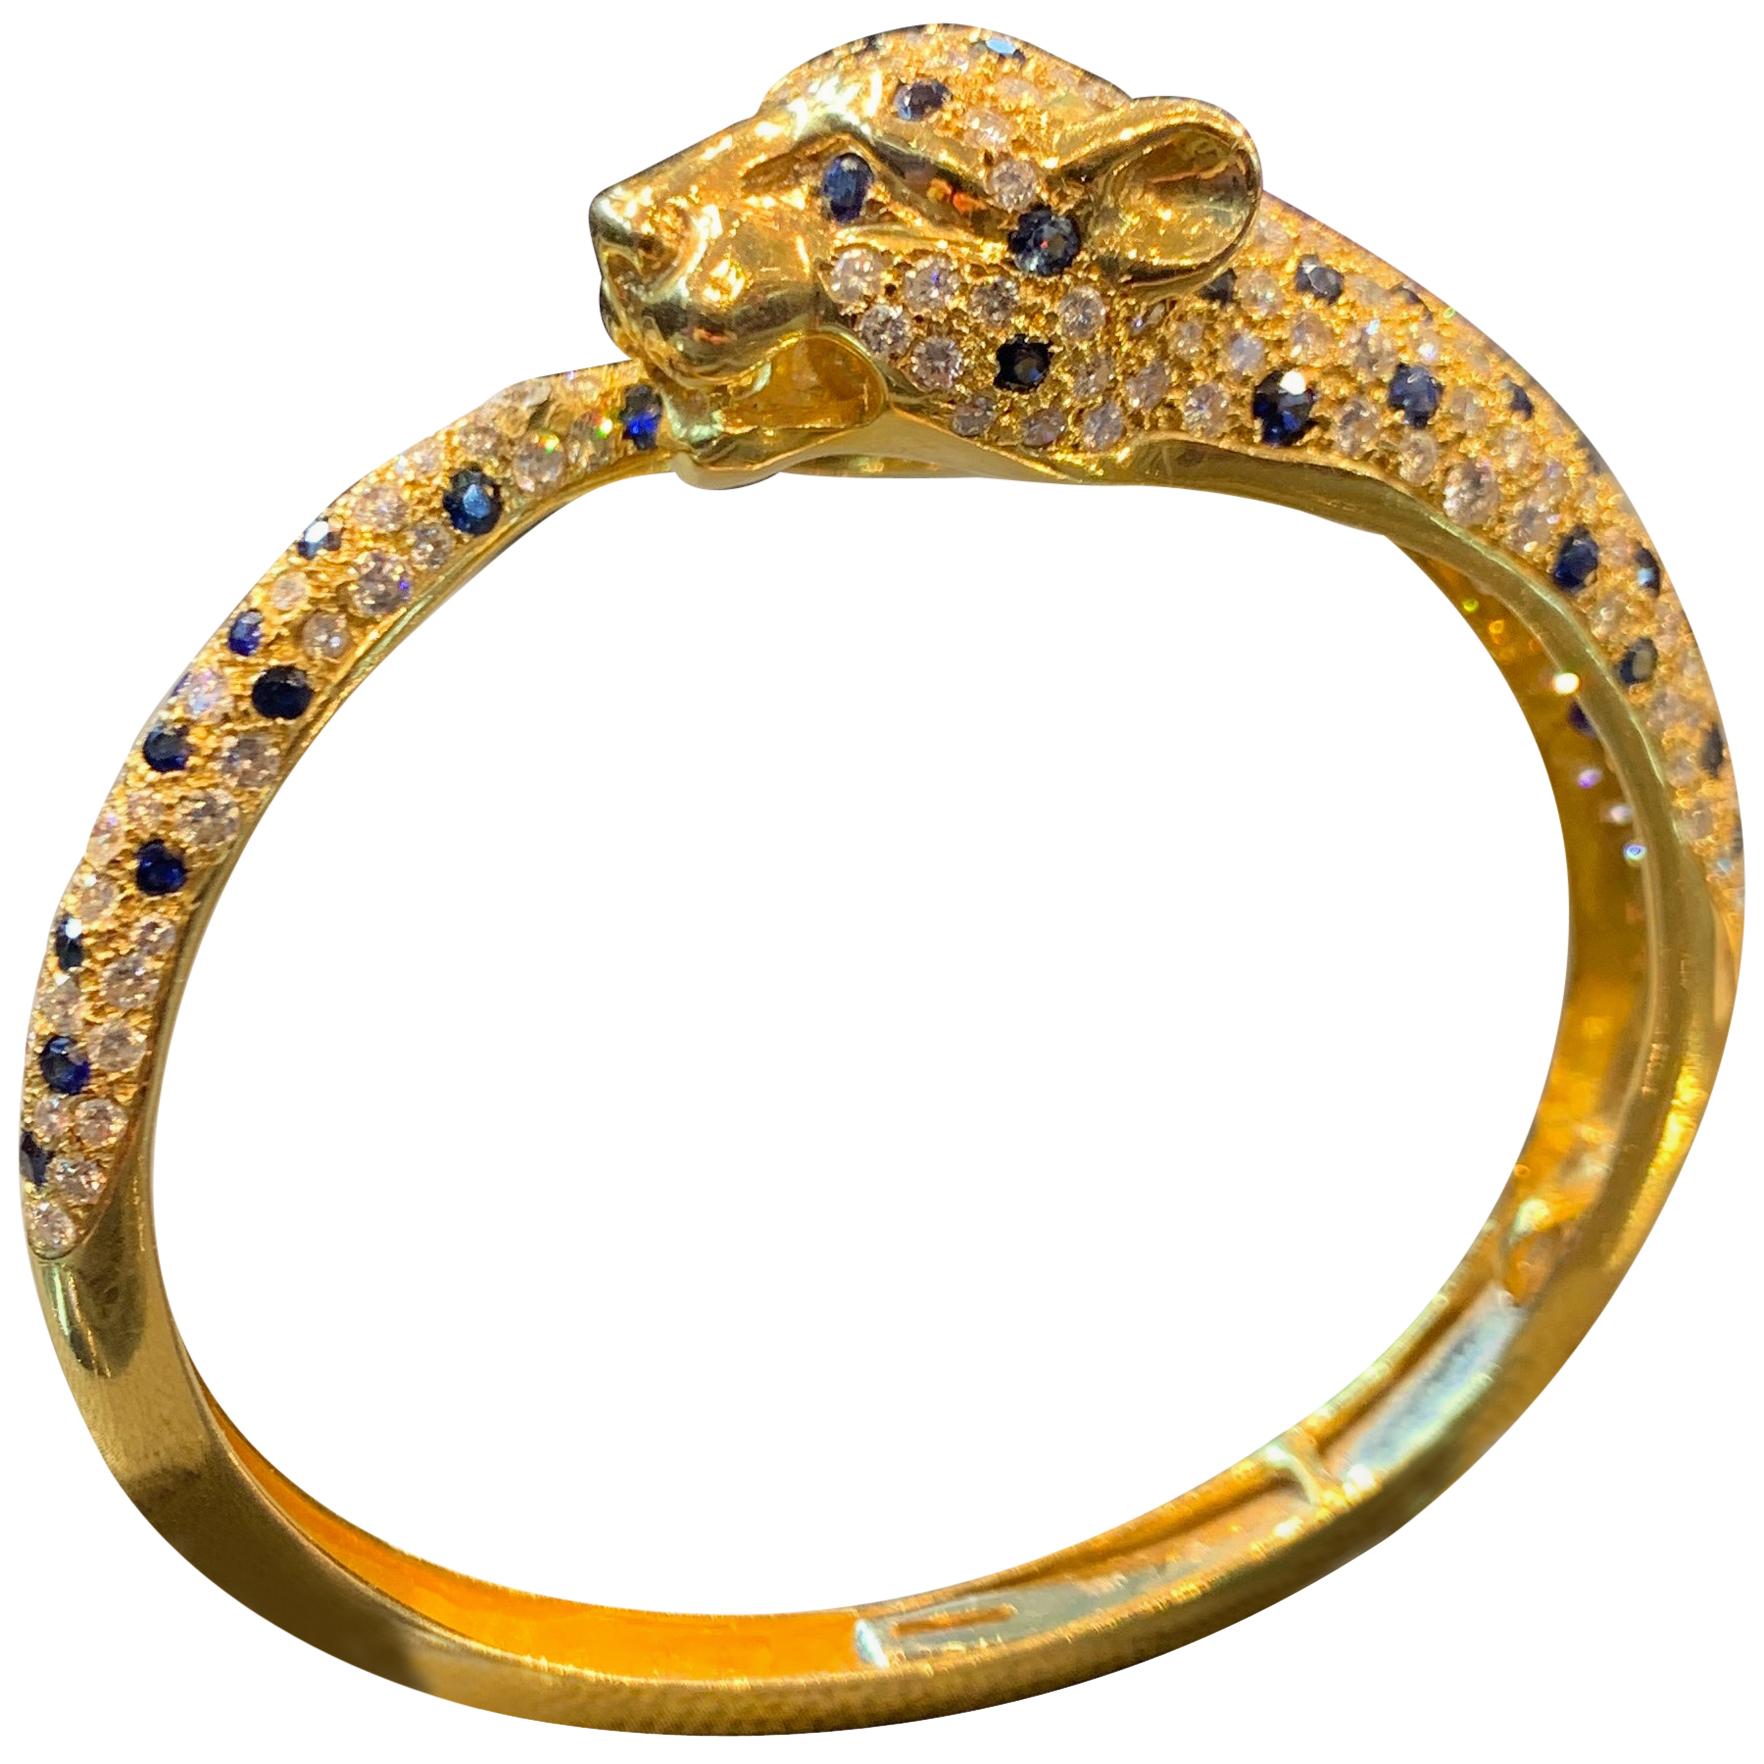 Details about   American Diamante Bangles Ethnic Indian Party Wear Sapphire Bracelet Set 4pc 2.4 